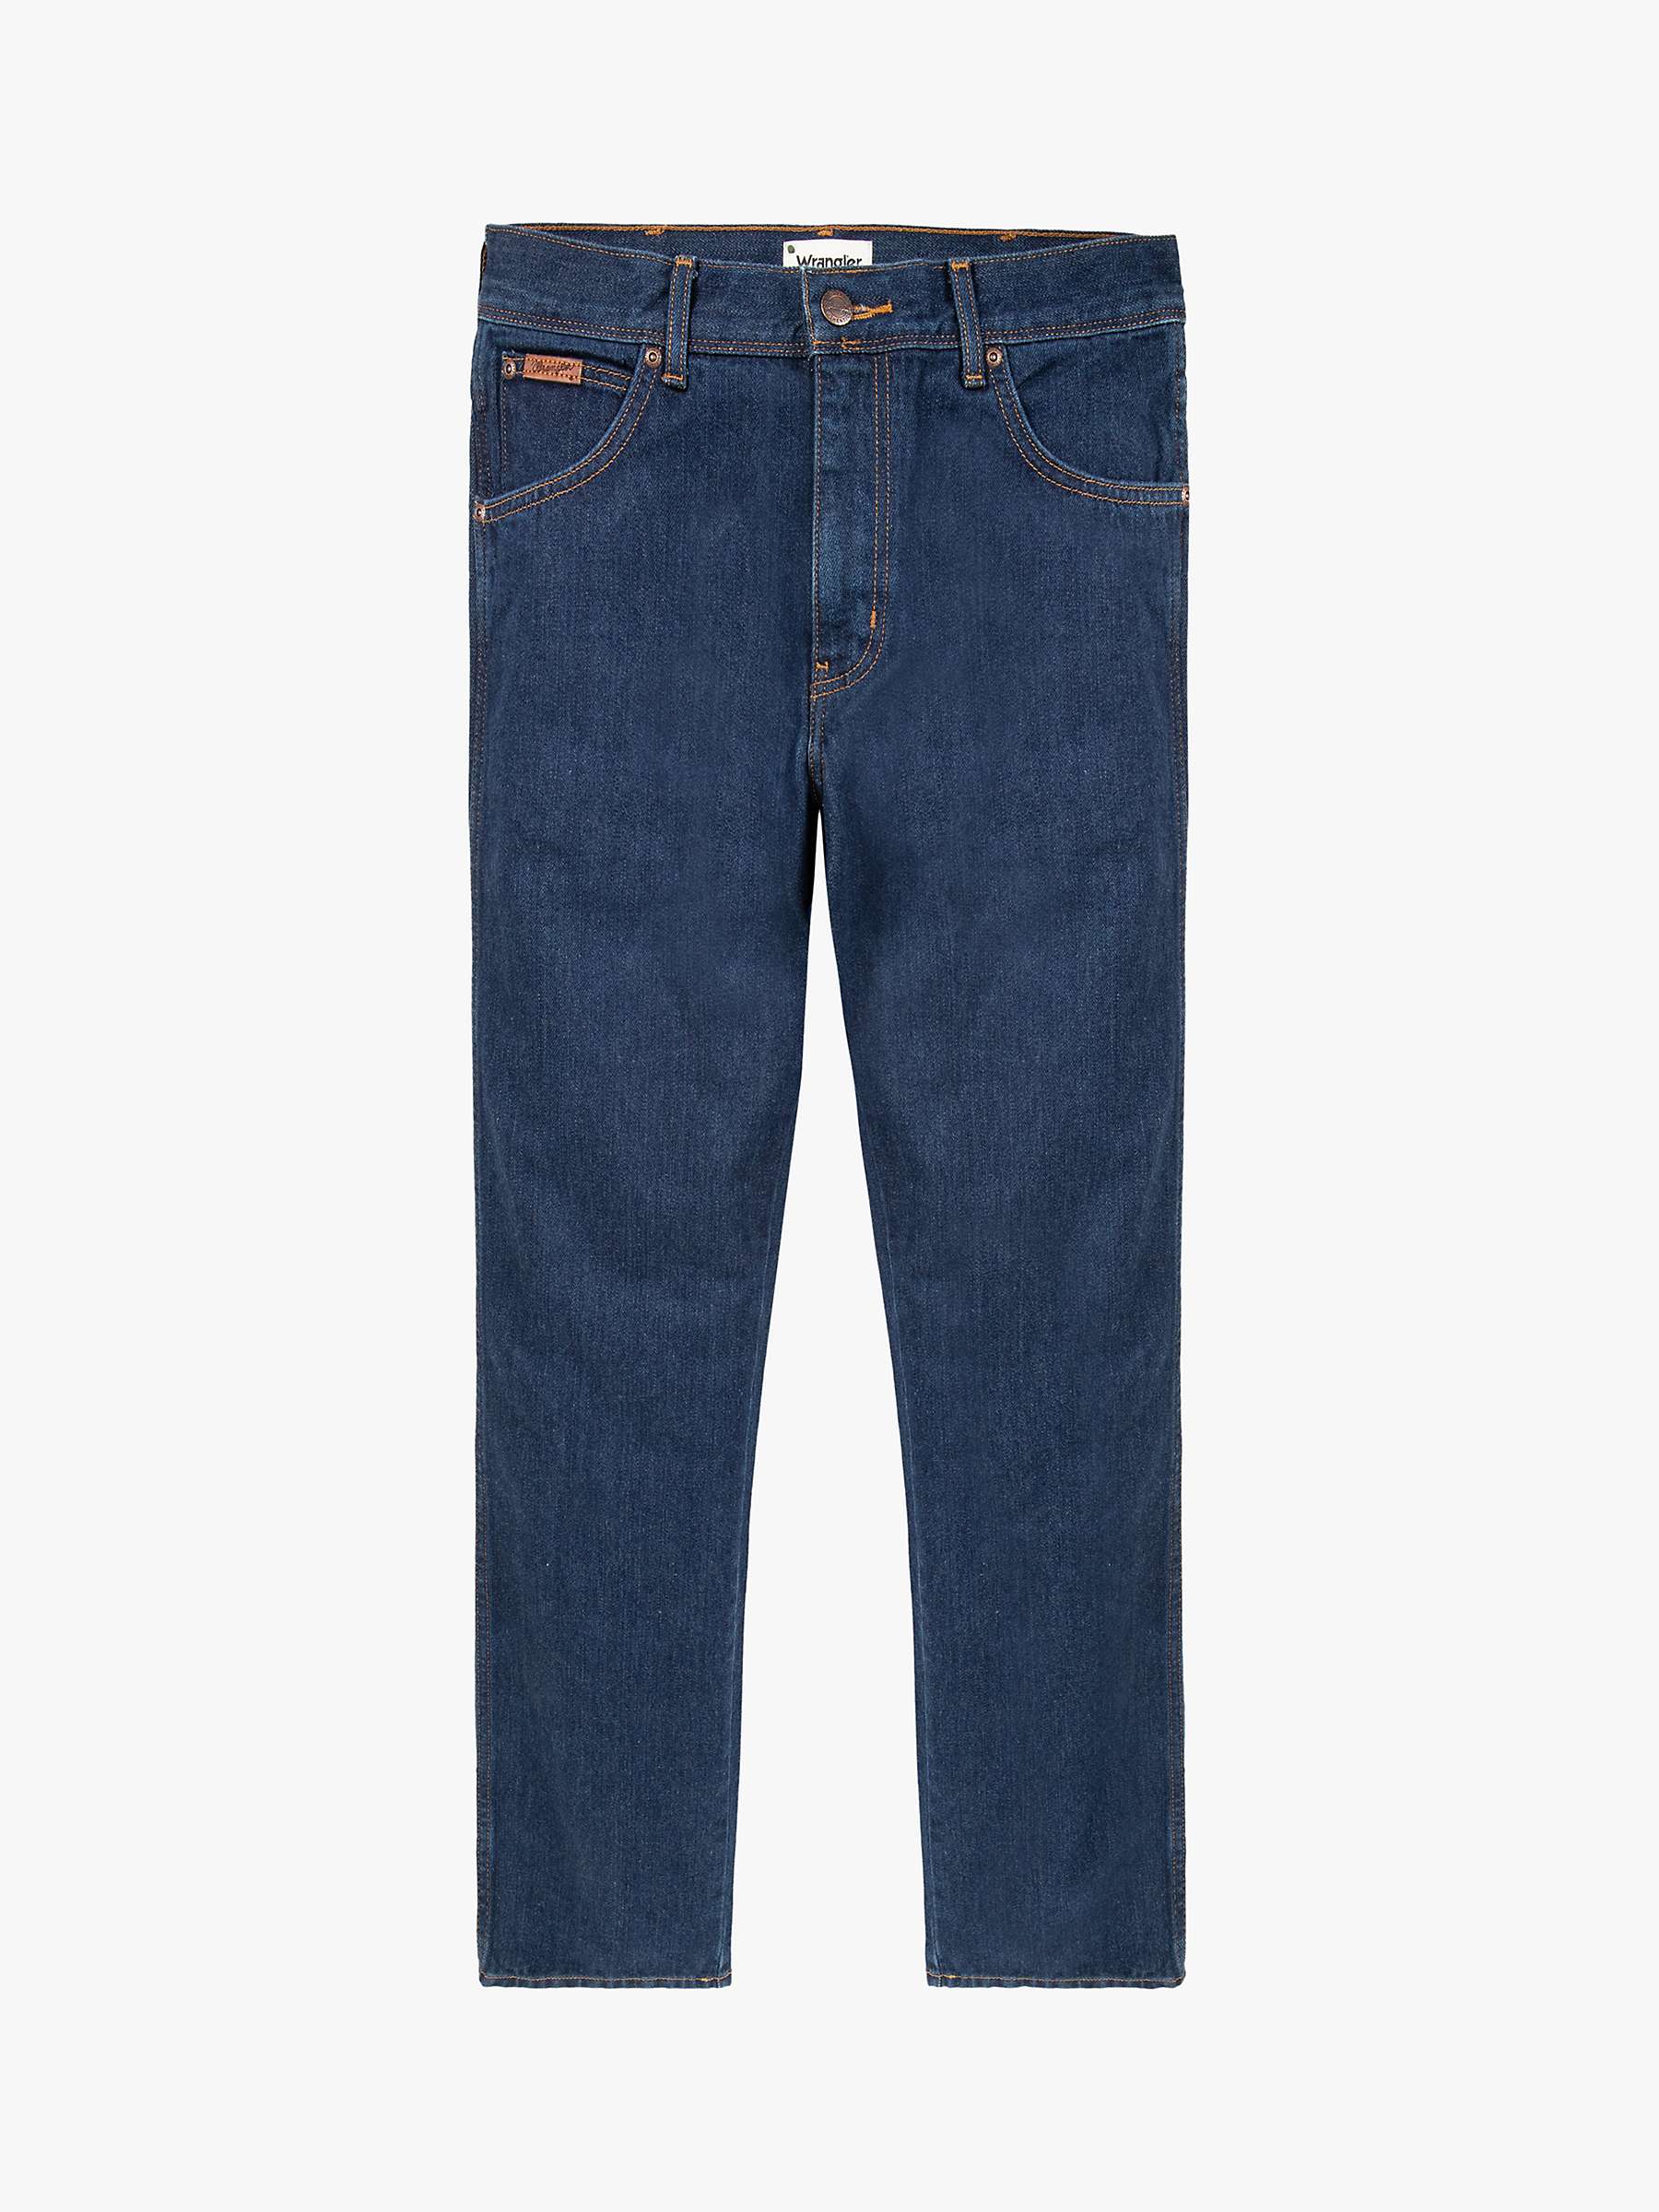 Buy Wrangler Texas Regular Fit Jeans, Blue Online at johnlewis.com